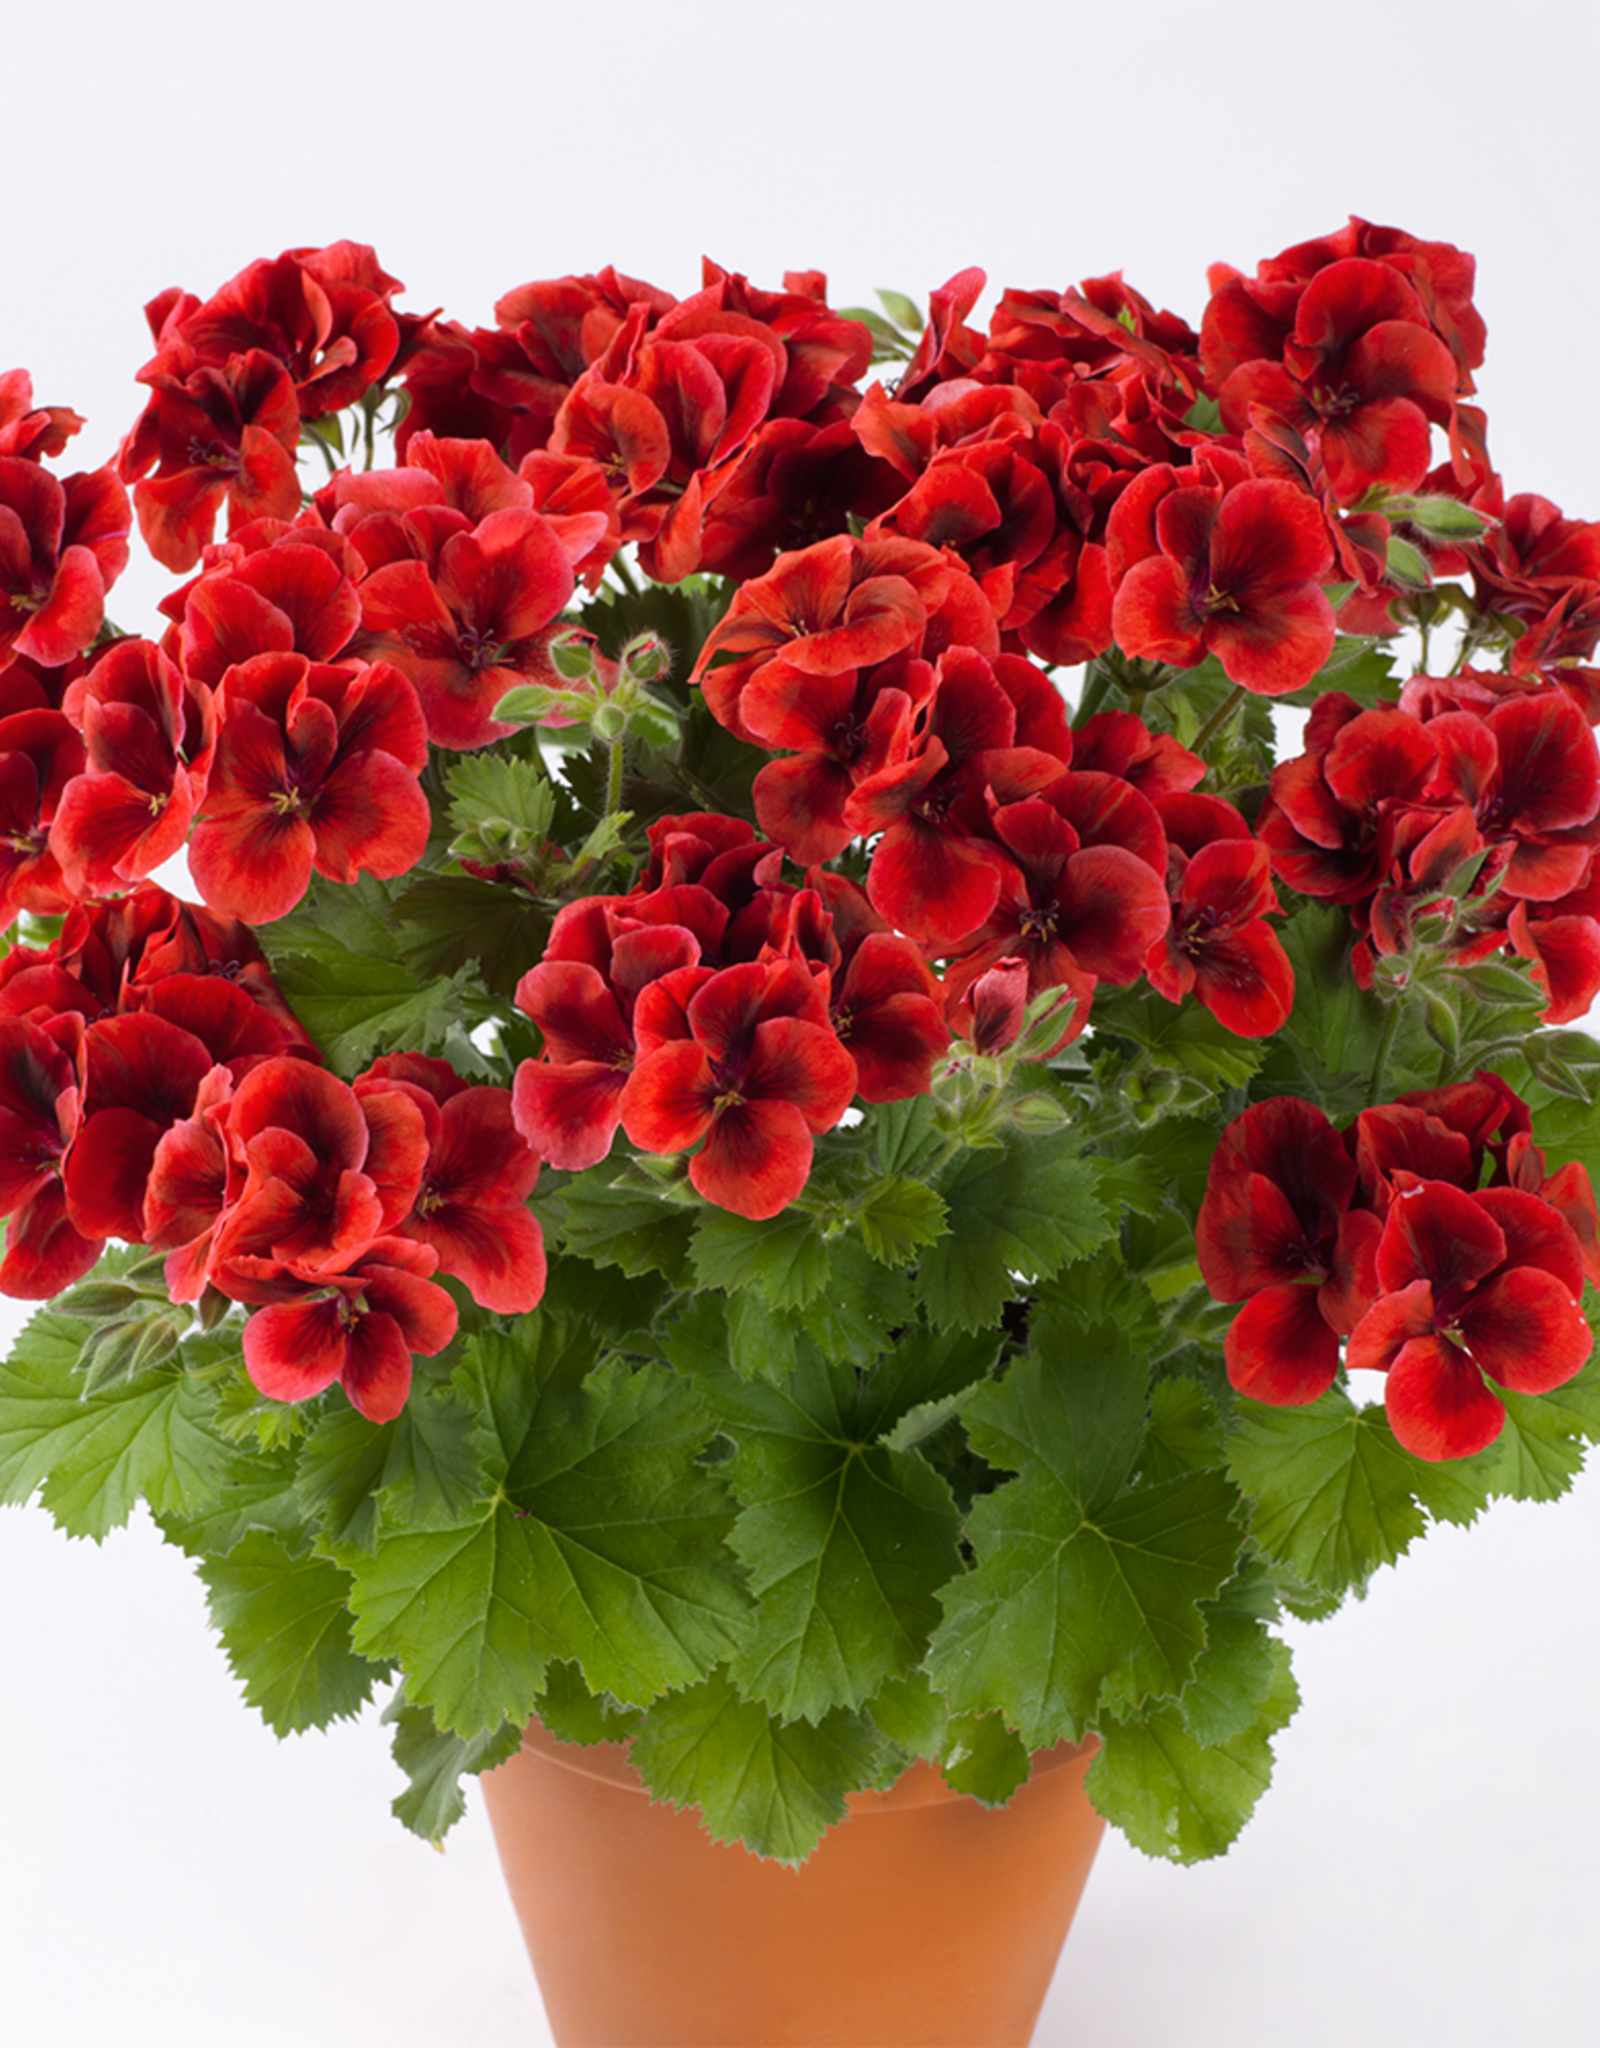 Esbenshades Greenhouses Pelargonium Candy Flowers® Bright Red 3.5 inch (Geranium)